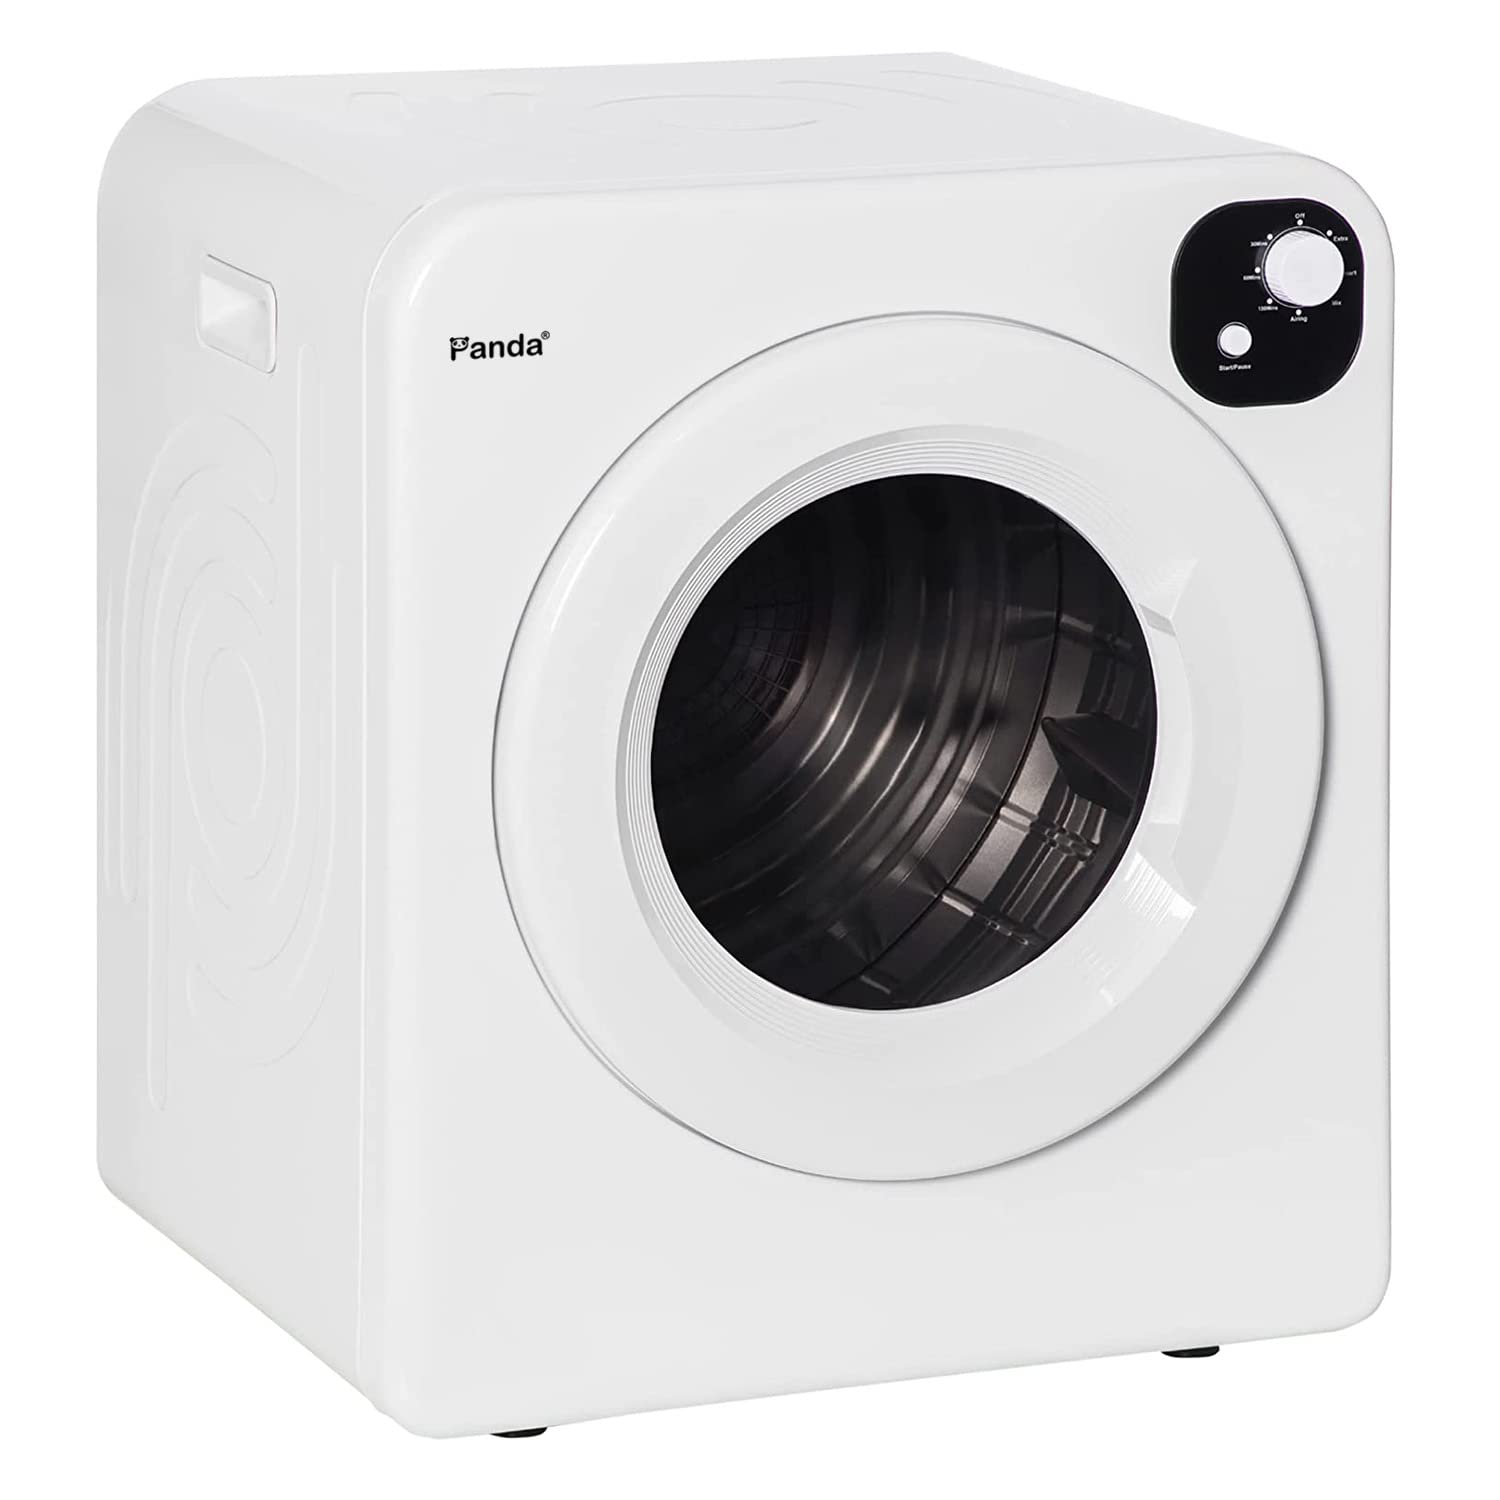  20 PCS Dryer Exhaust Filter for Panda-365 days